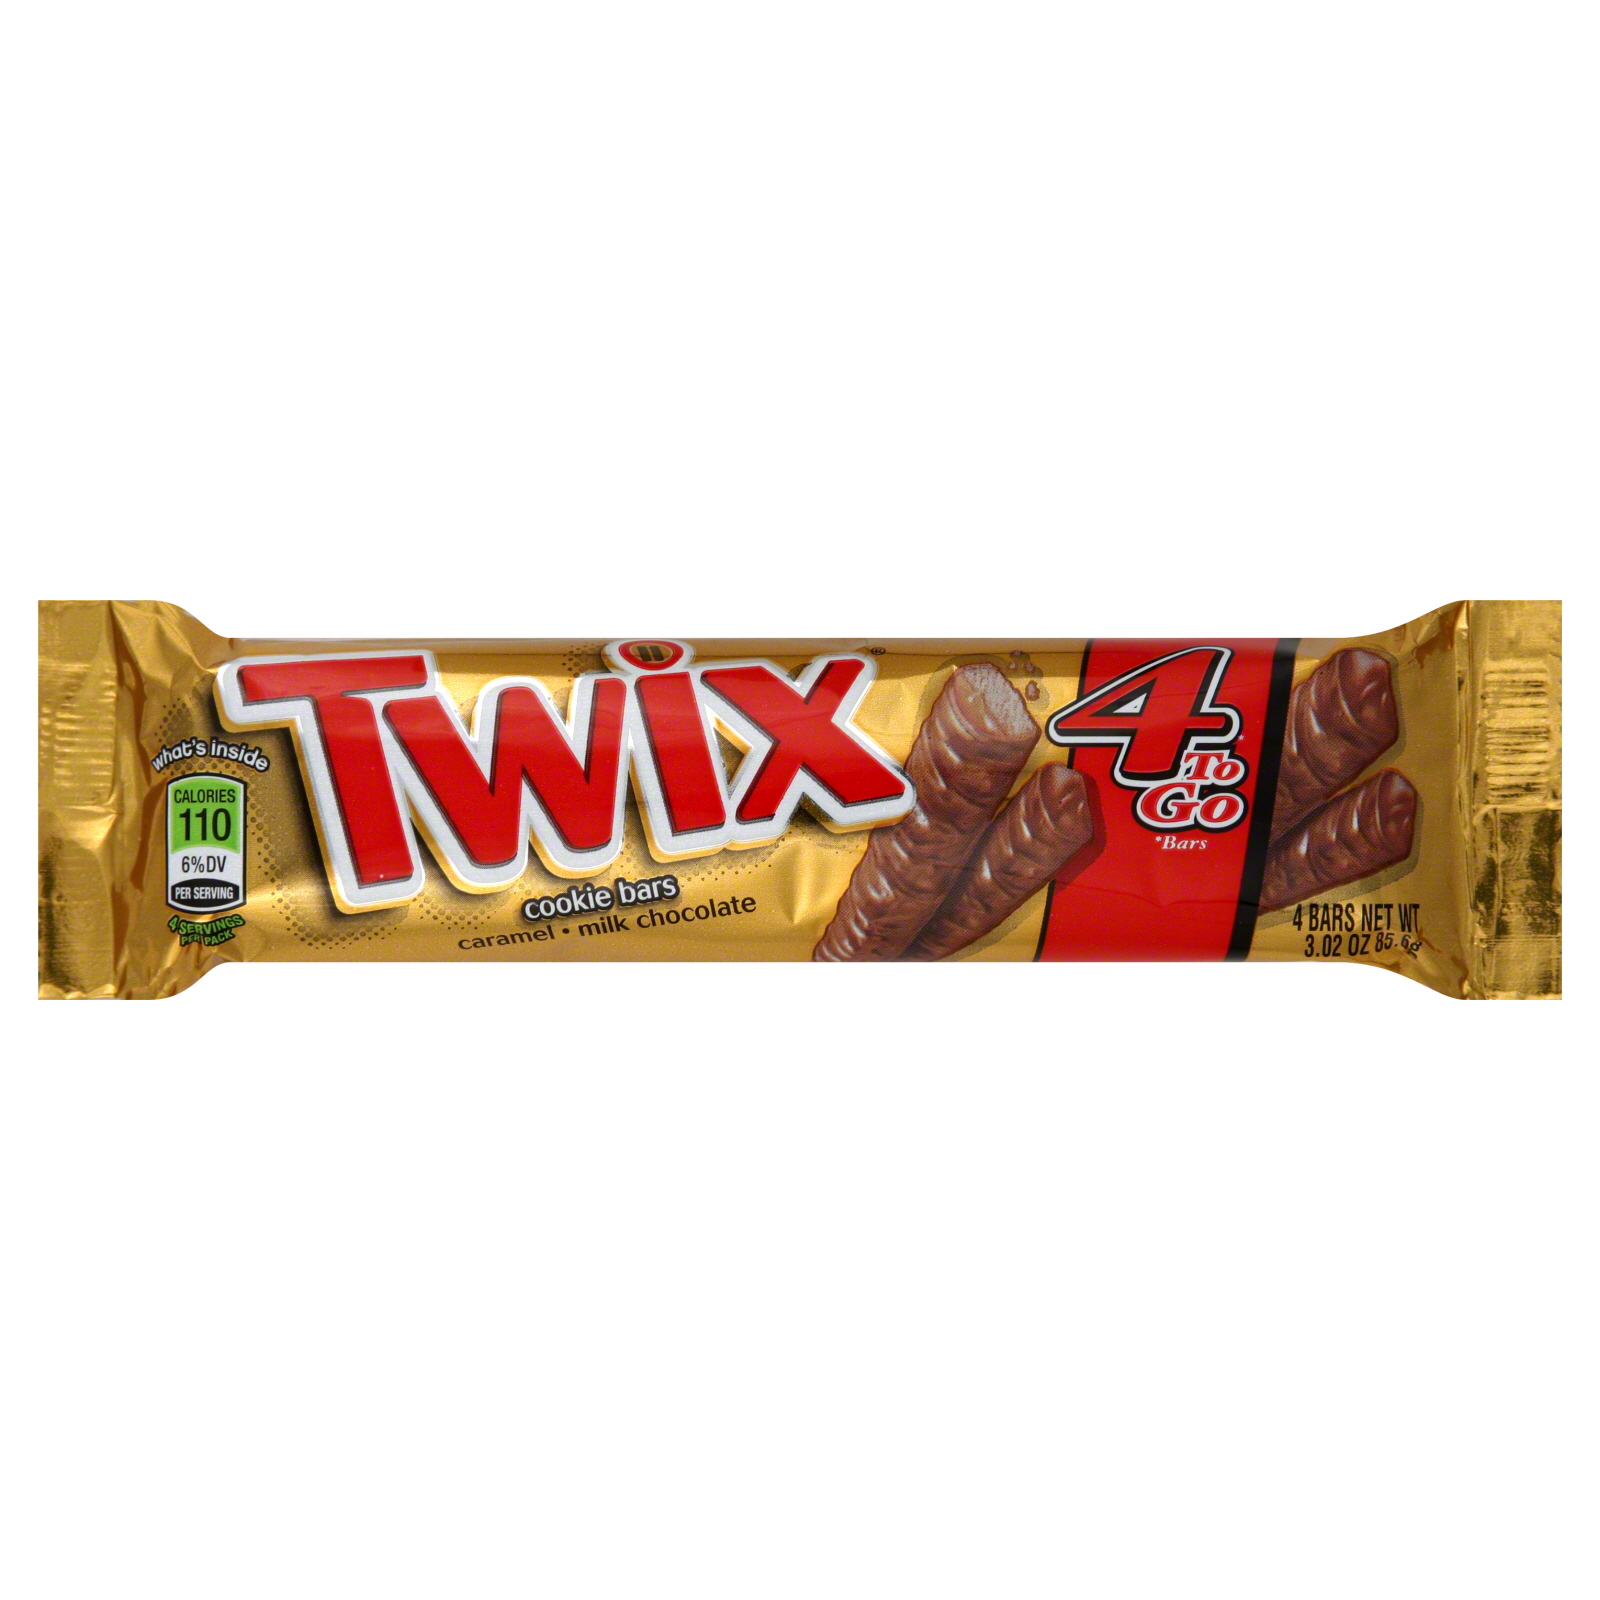 Twix Cookie Bars, Caramel Milk Chocolate, 4 bars [3.02 oz (85.6 g)]